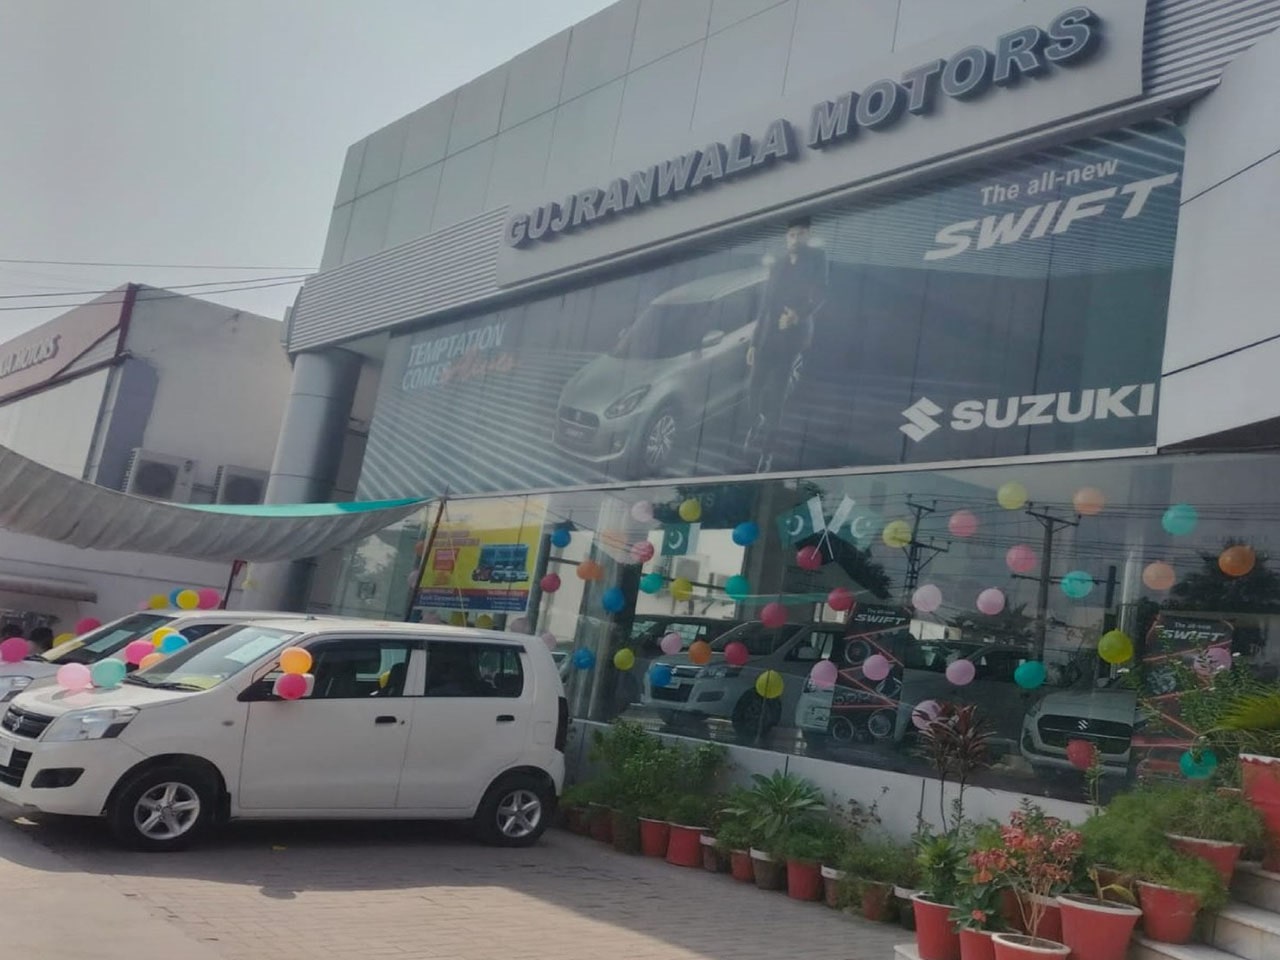 Suzuki-Gujranwala-Motors-used-cars-for-sale